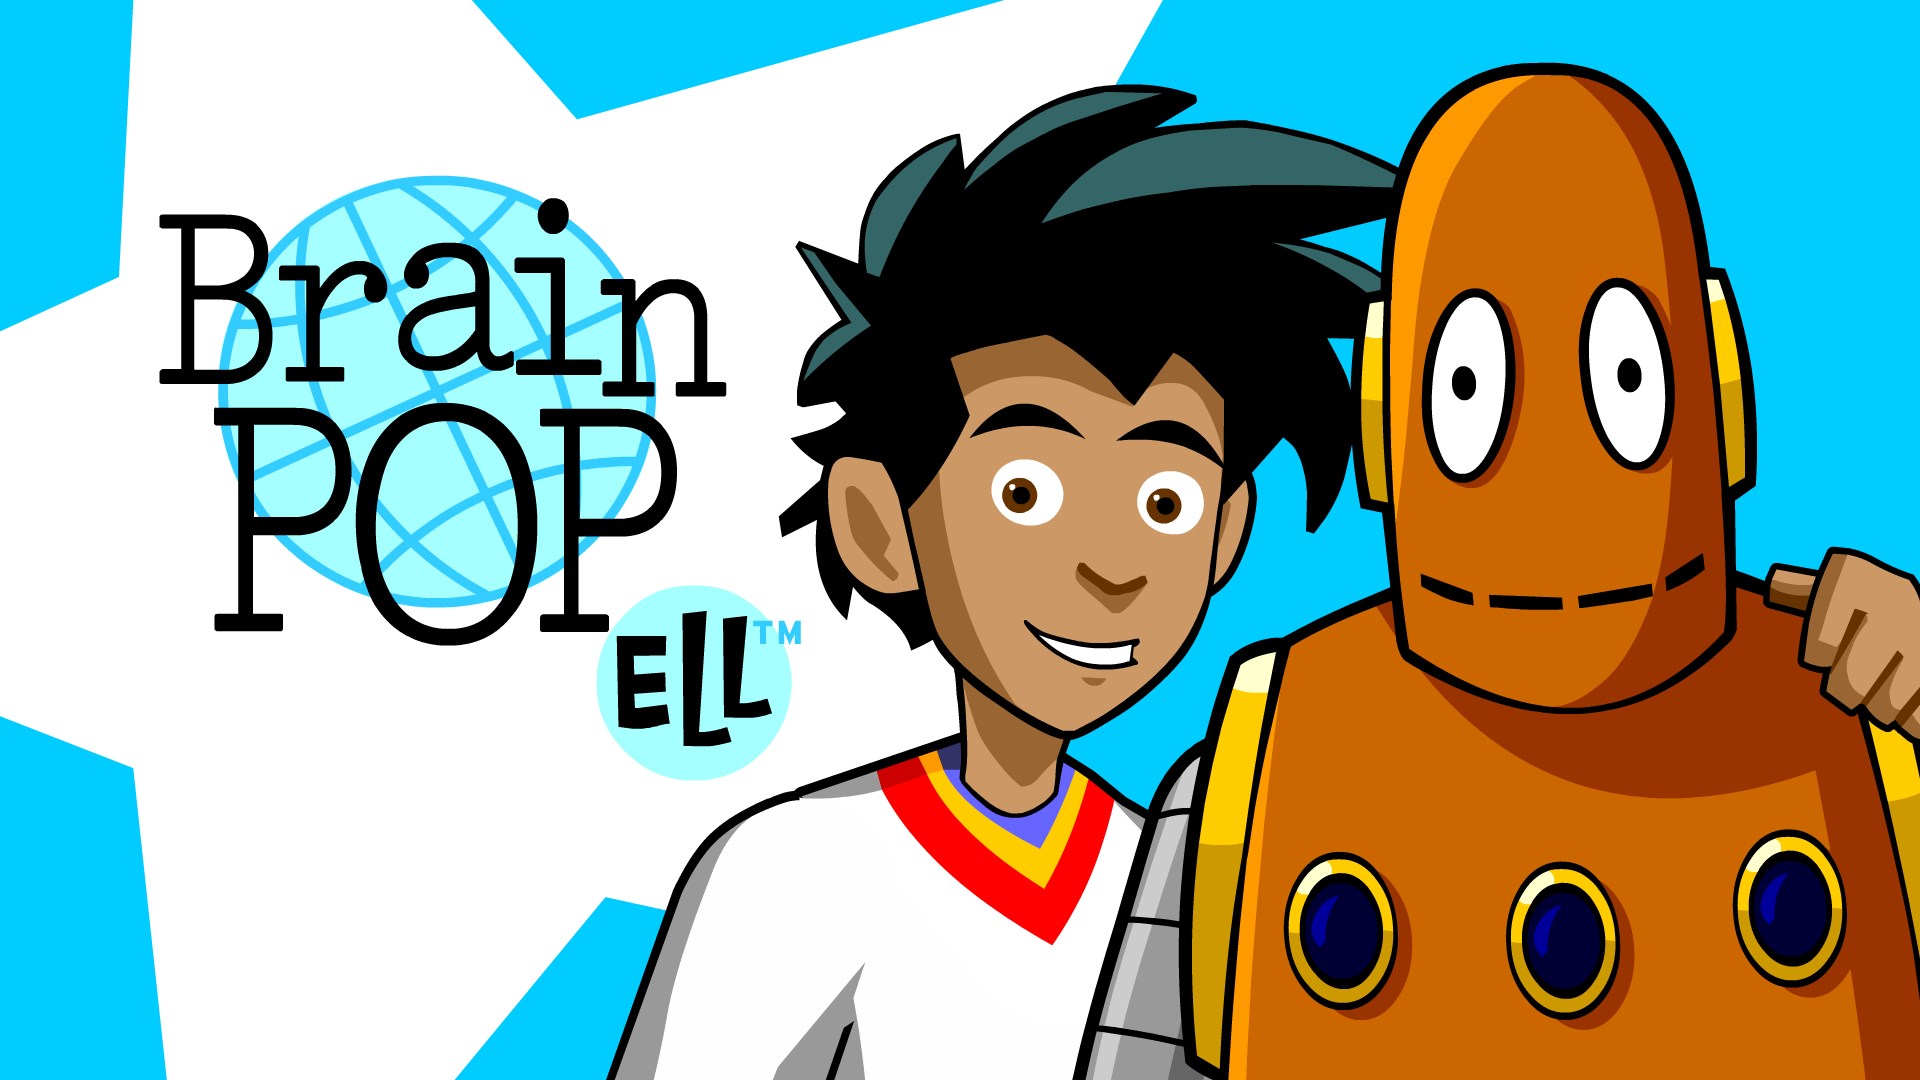 Image result for BrainPOP ell logo